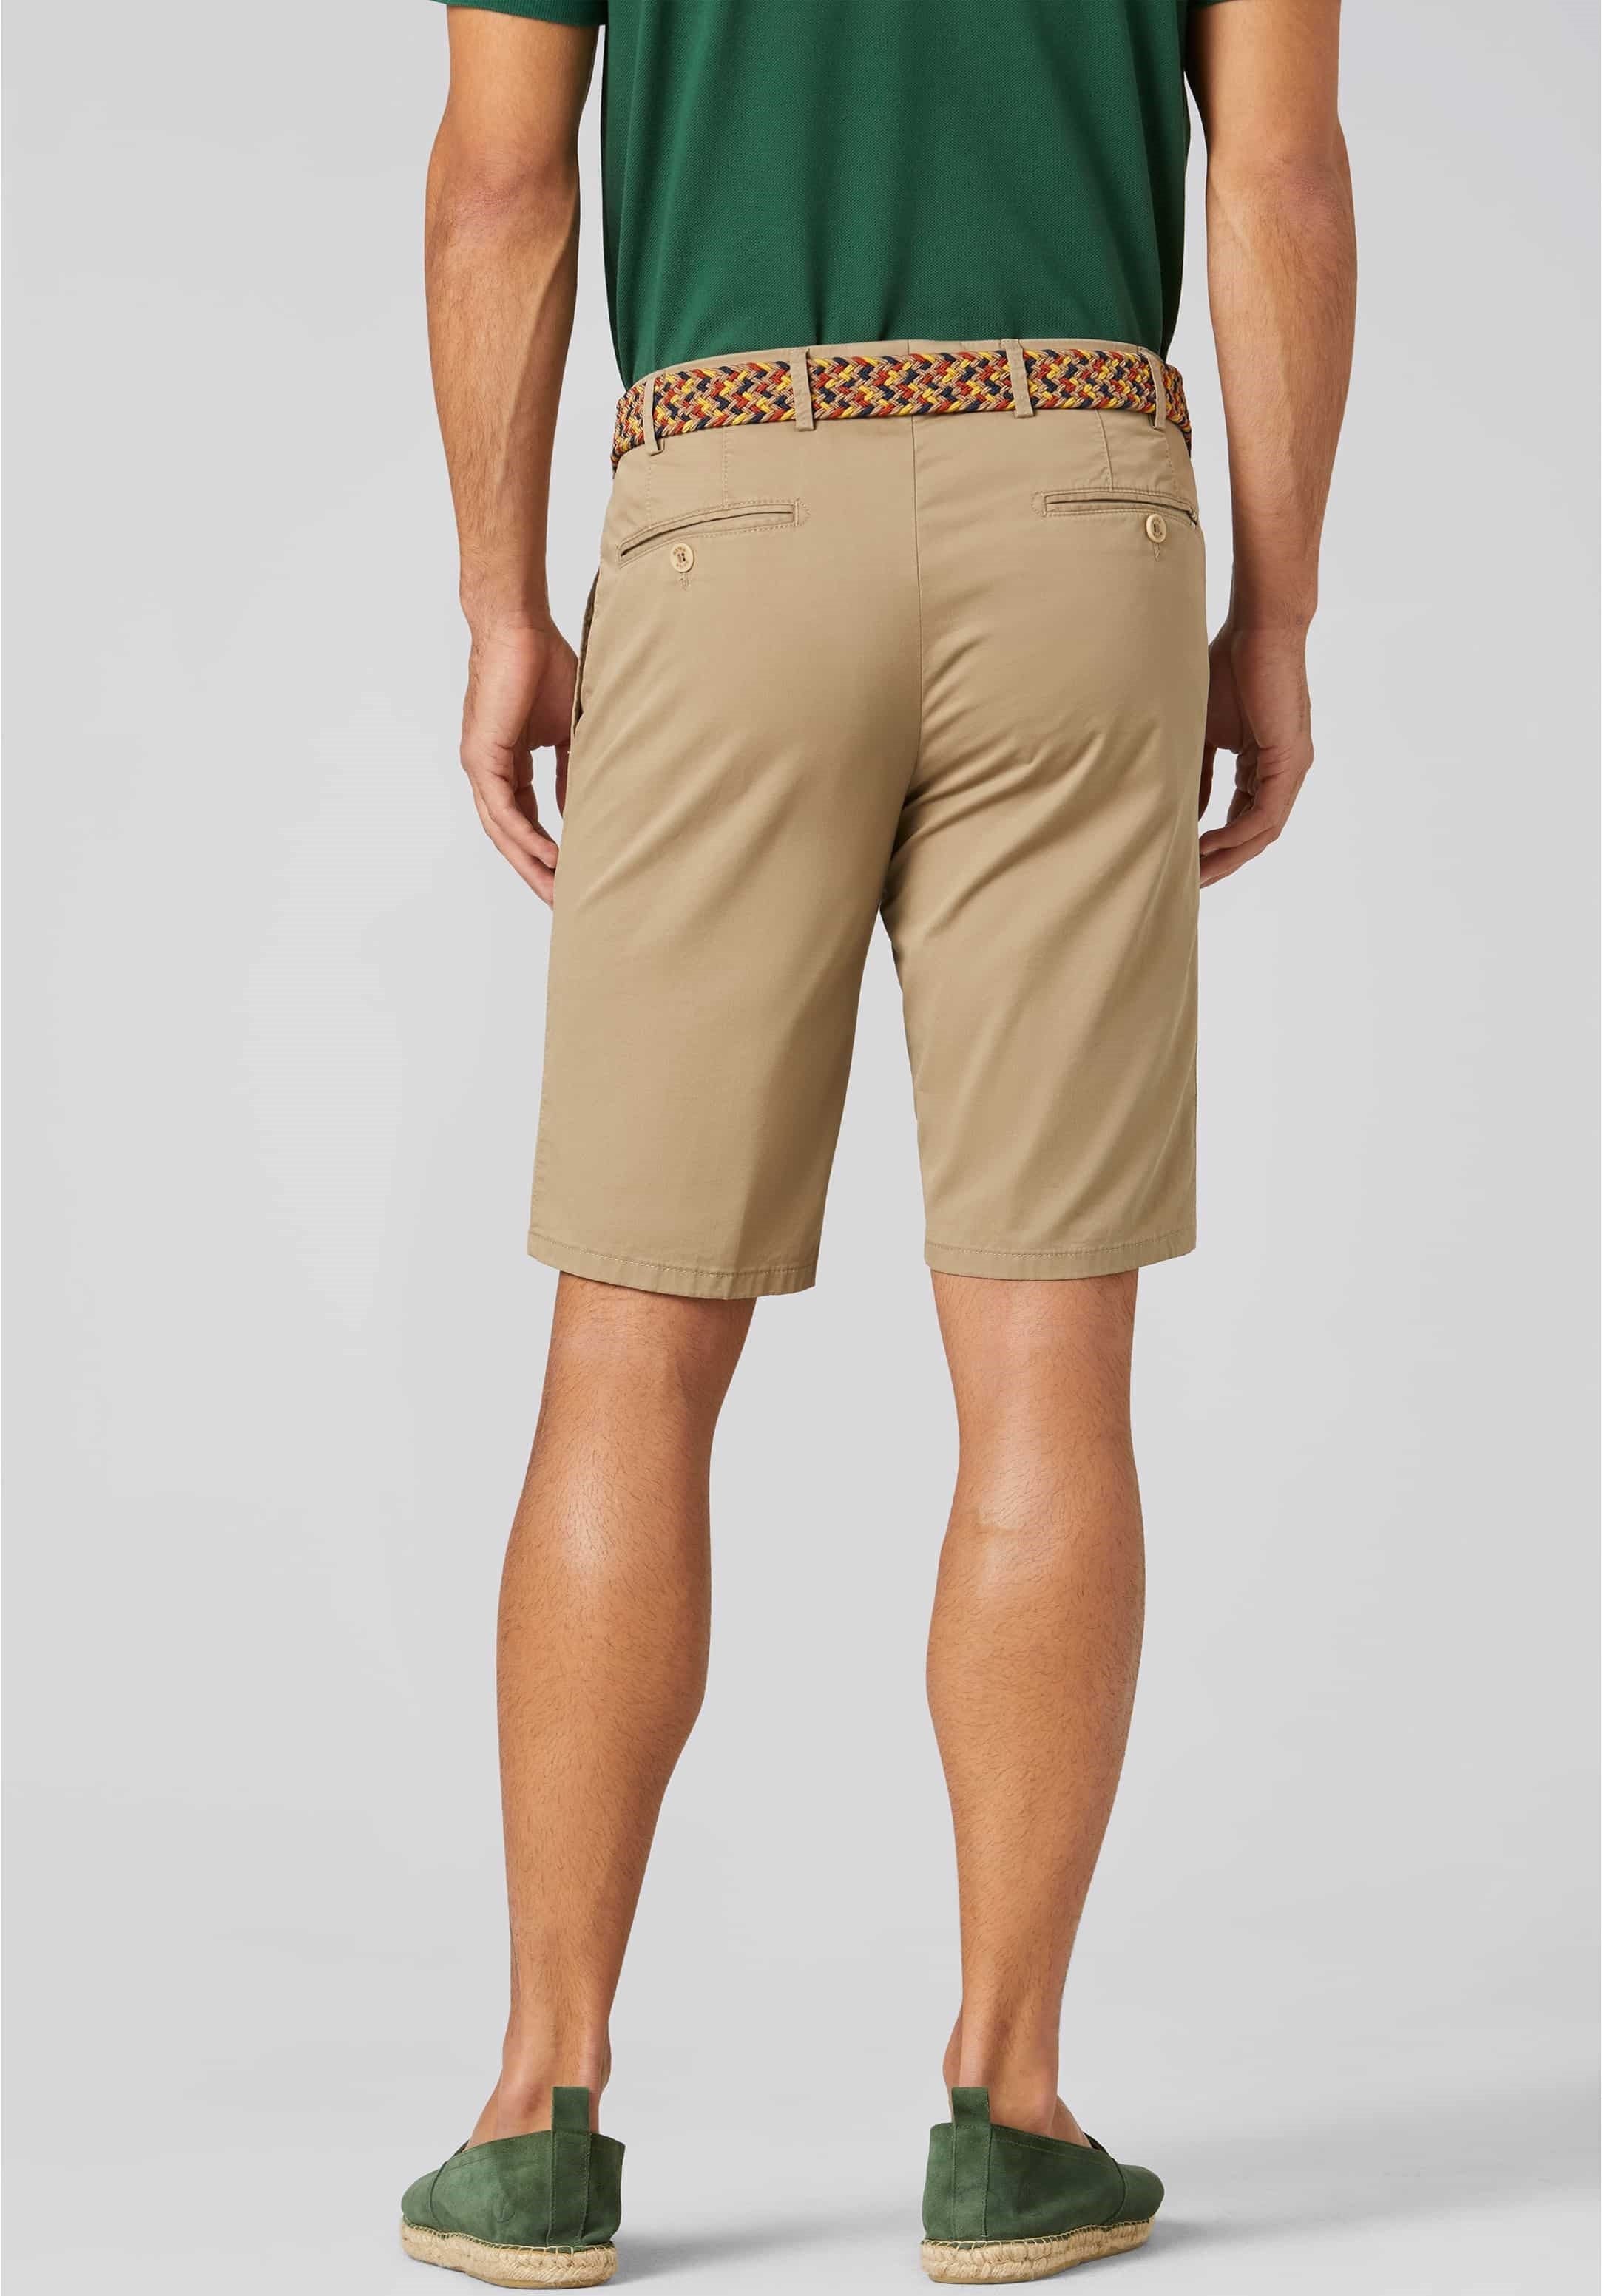 MEYER B-Palma Shorts - Men's Cotton Twill - Taupe